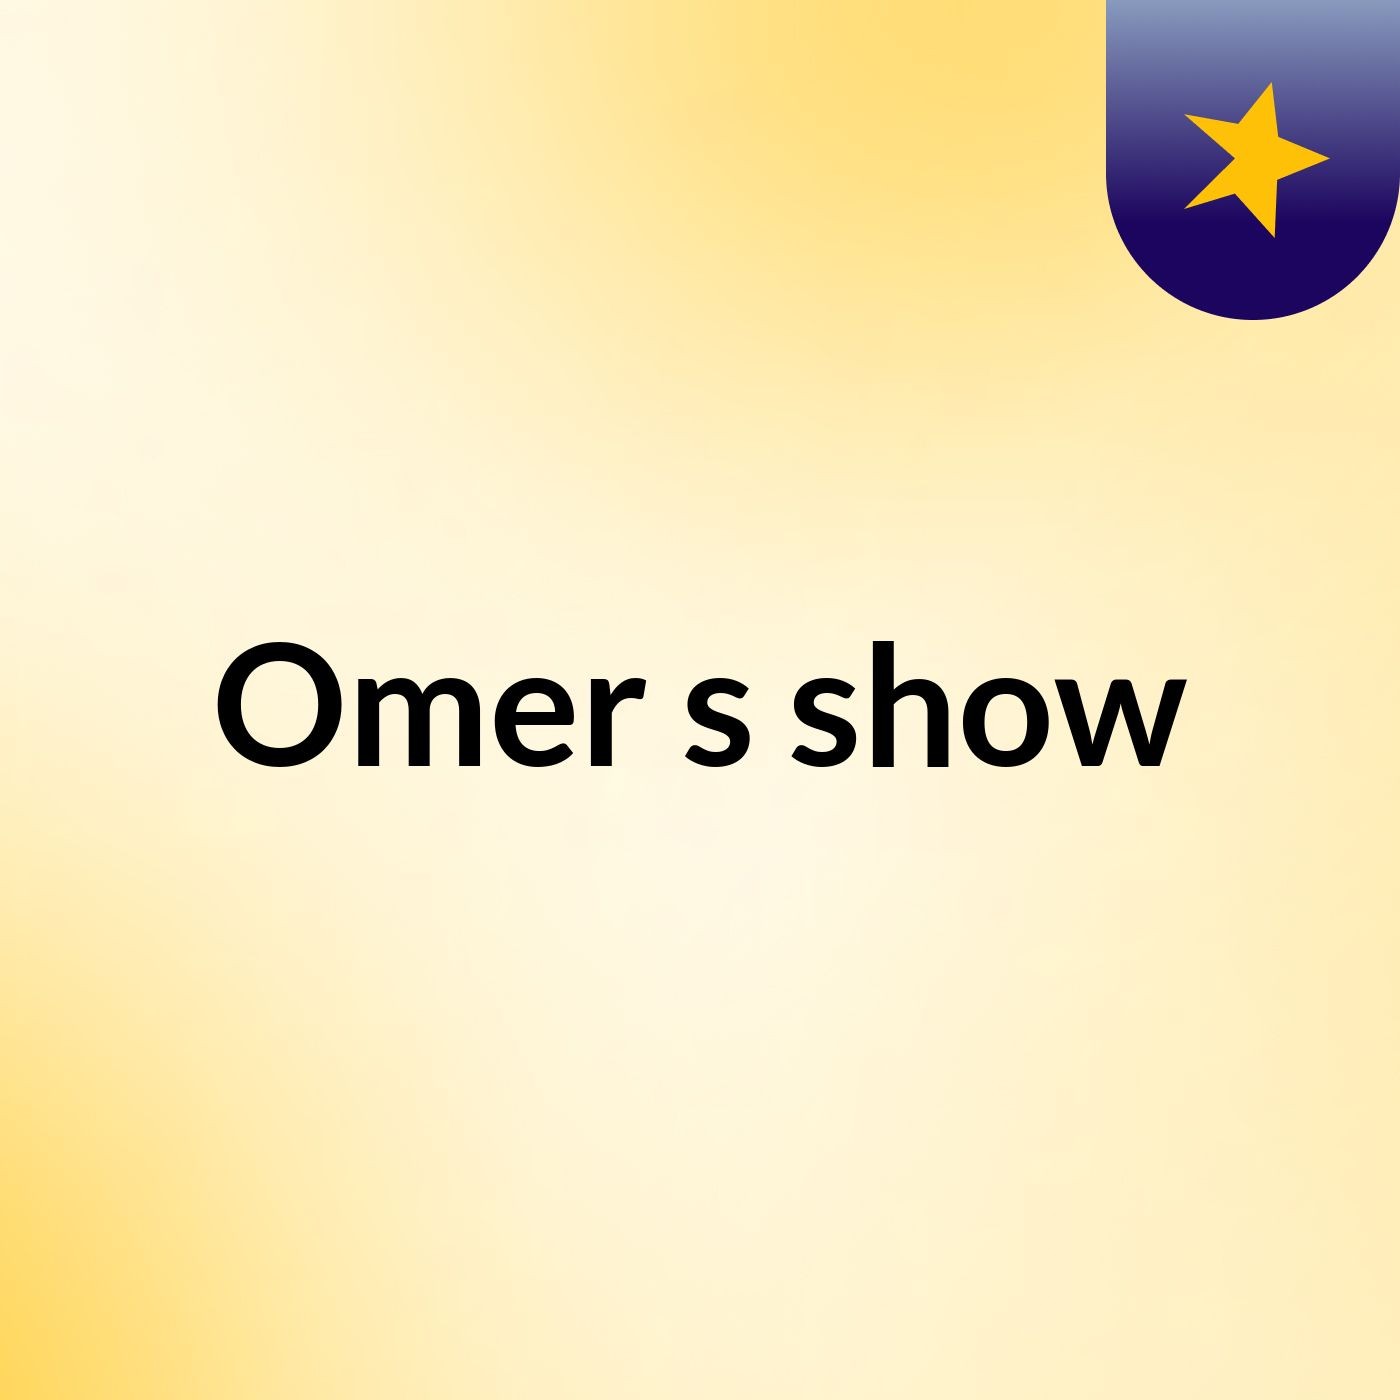 Omer's show